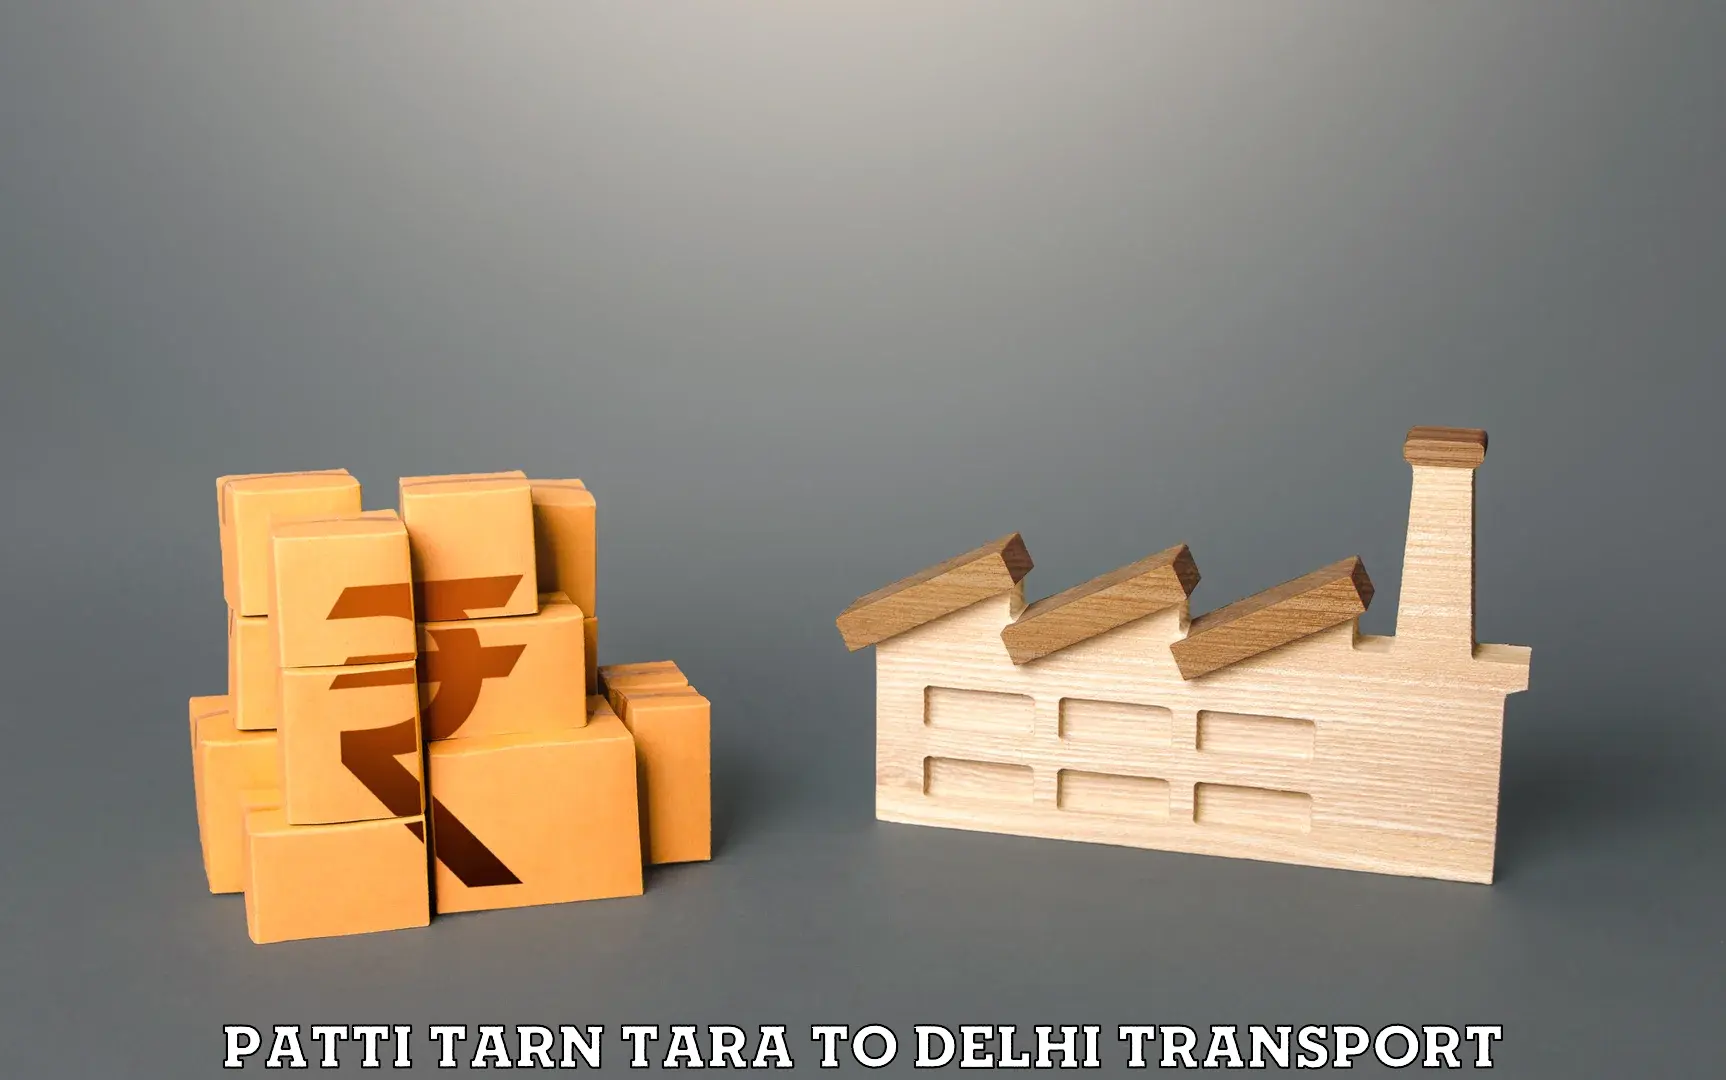 Transport bike from one state to another Patti Tarn Tara to Delhi